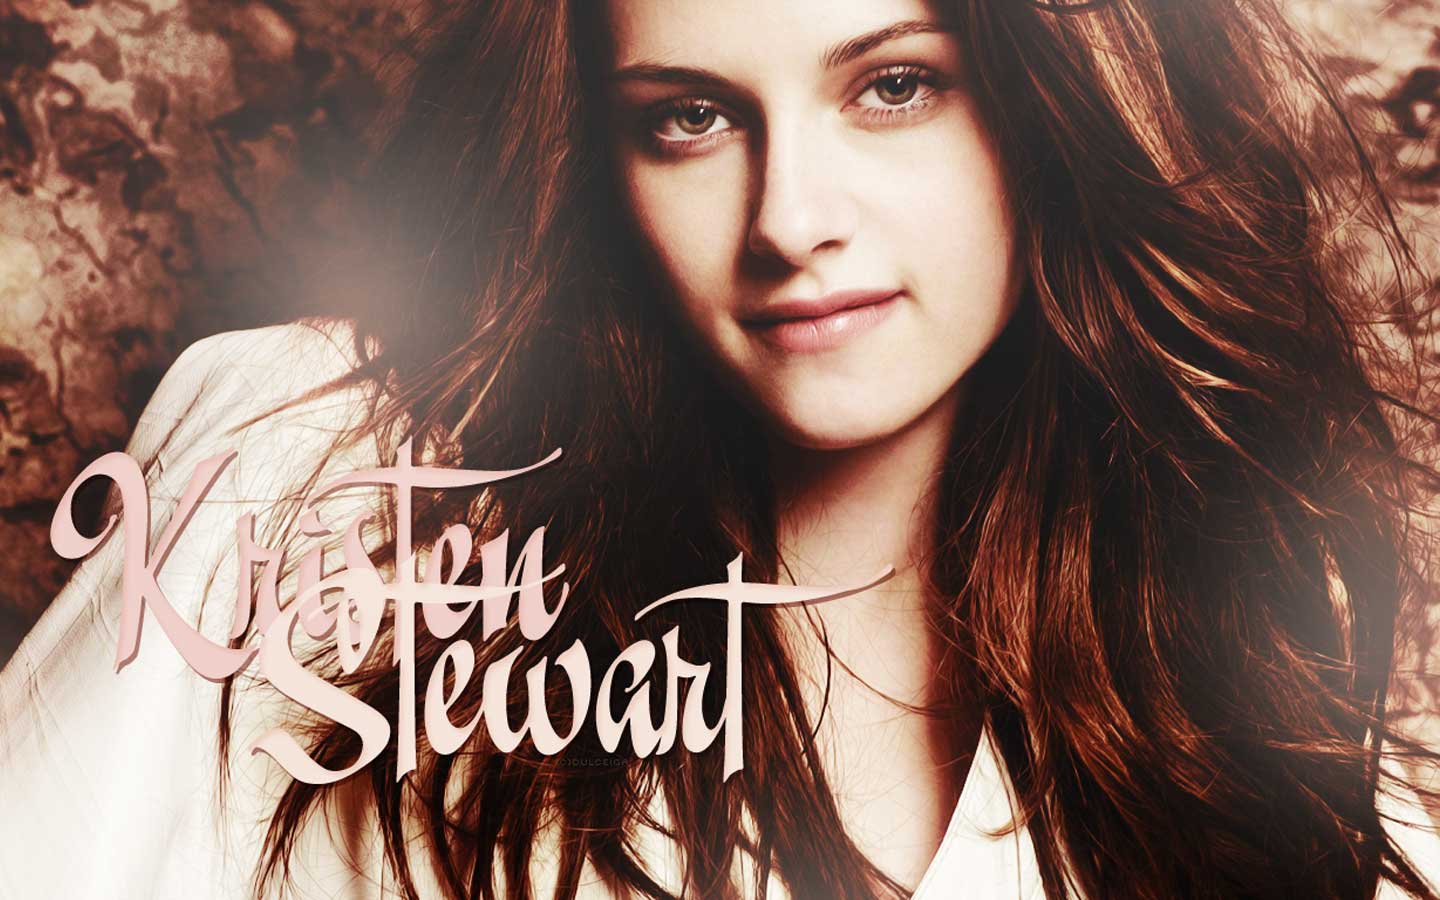 Kristen-Stewart-Wallpaper-Download-Free.jpg